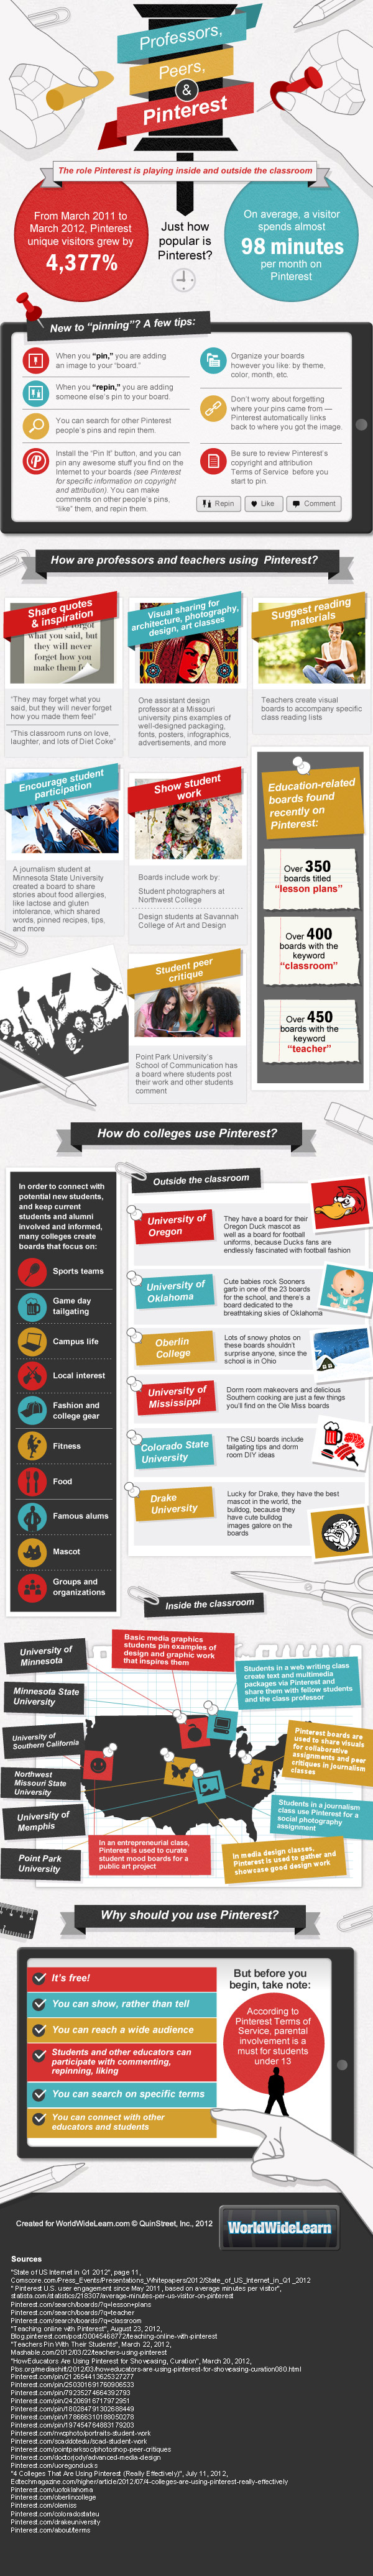 professors-peers-pinterest-infographic